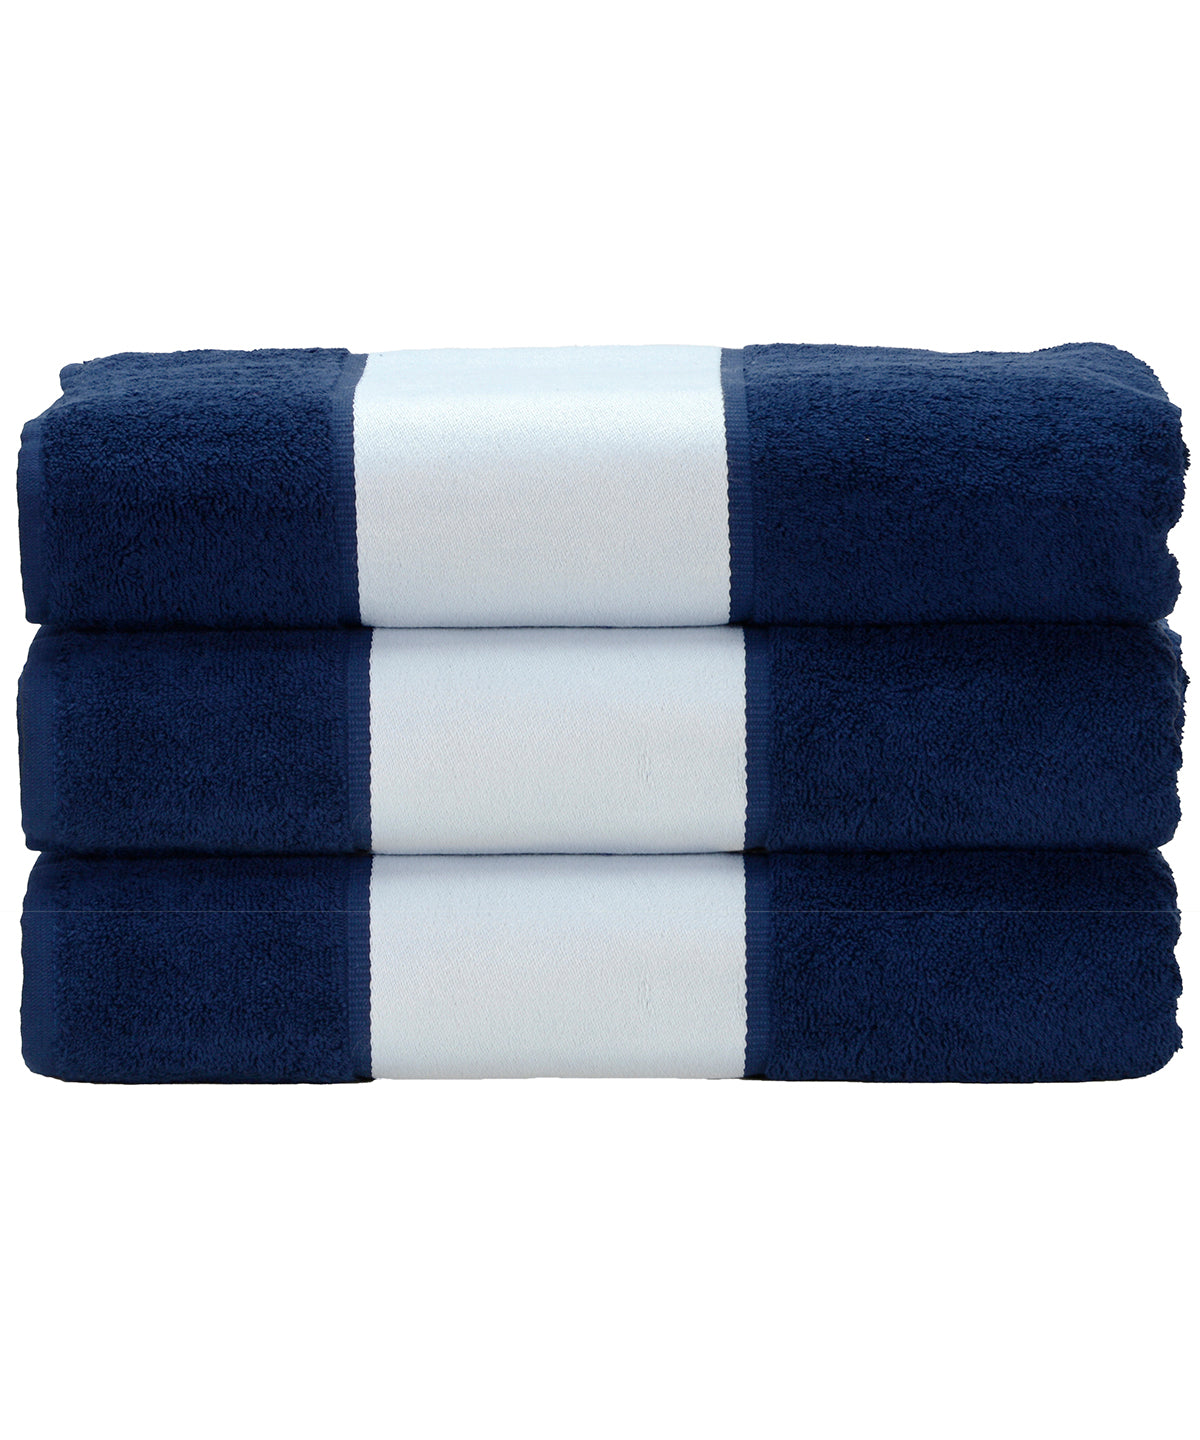 Personalised Towels - Navy A&R Towels ARTG® SUBLI-Me® hand towel